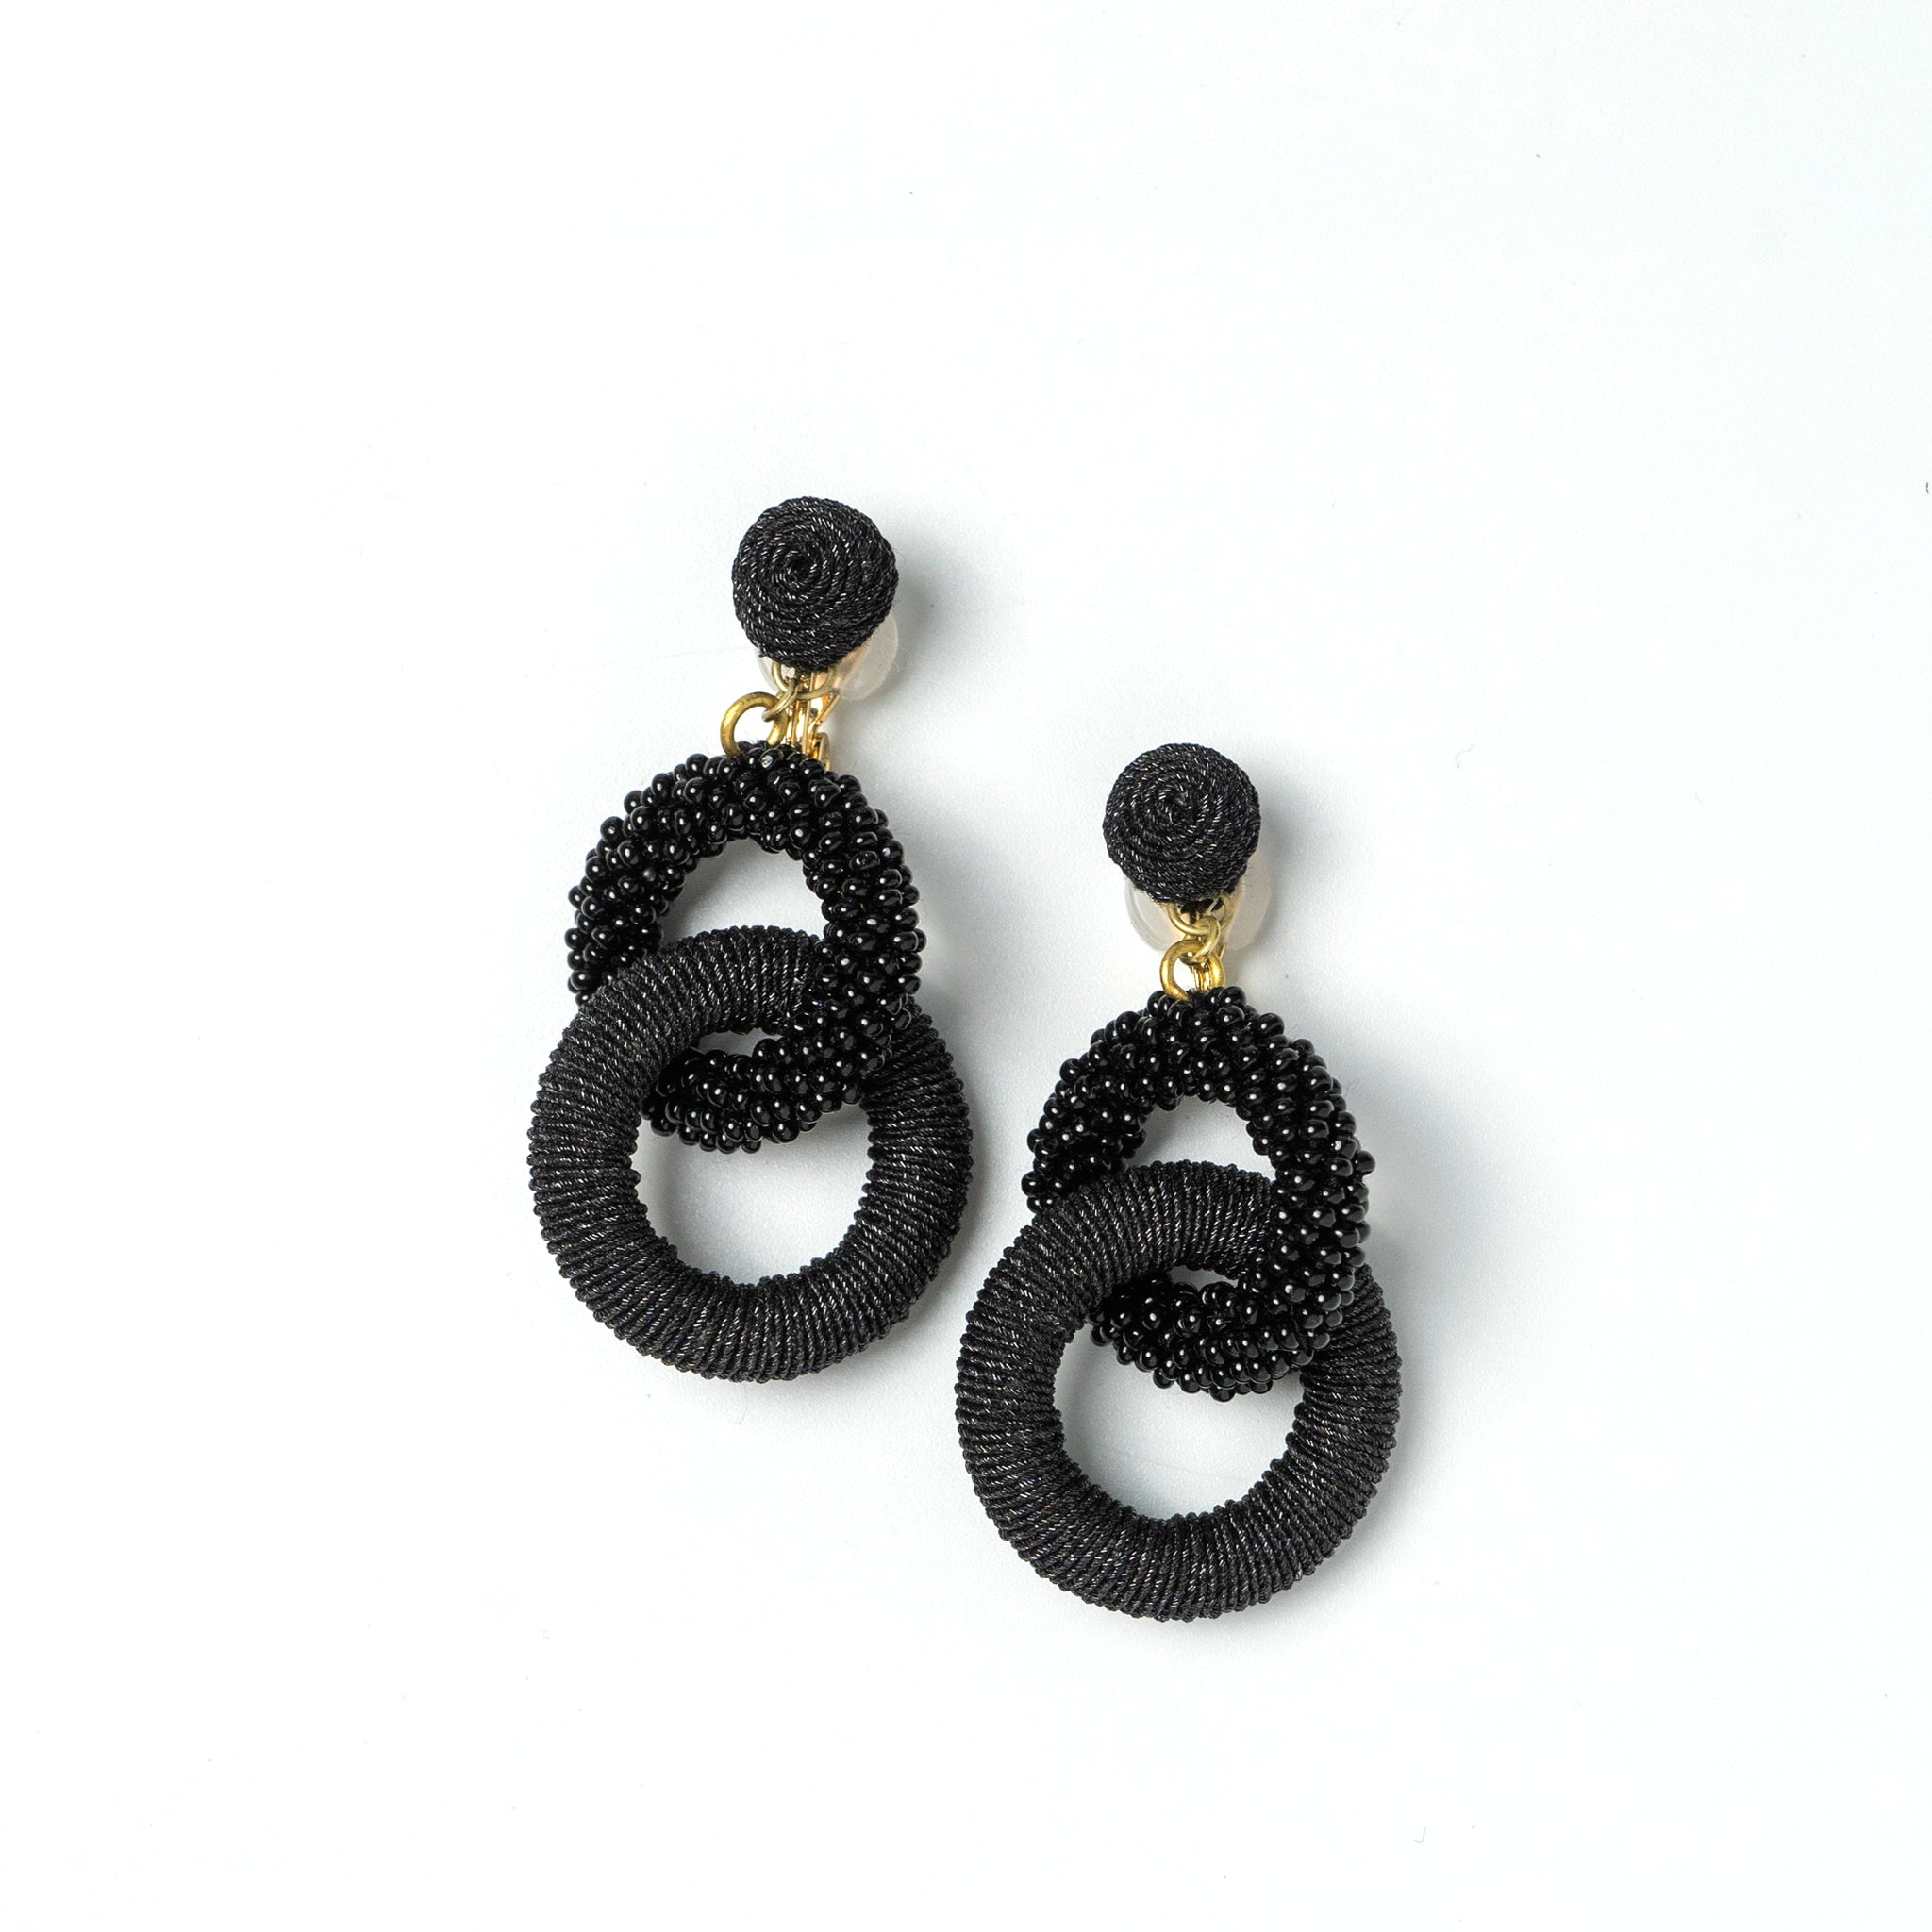 Round design motif piercing/earrings